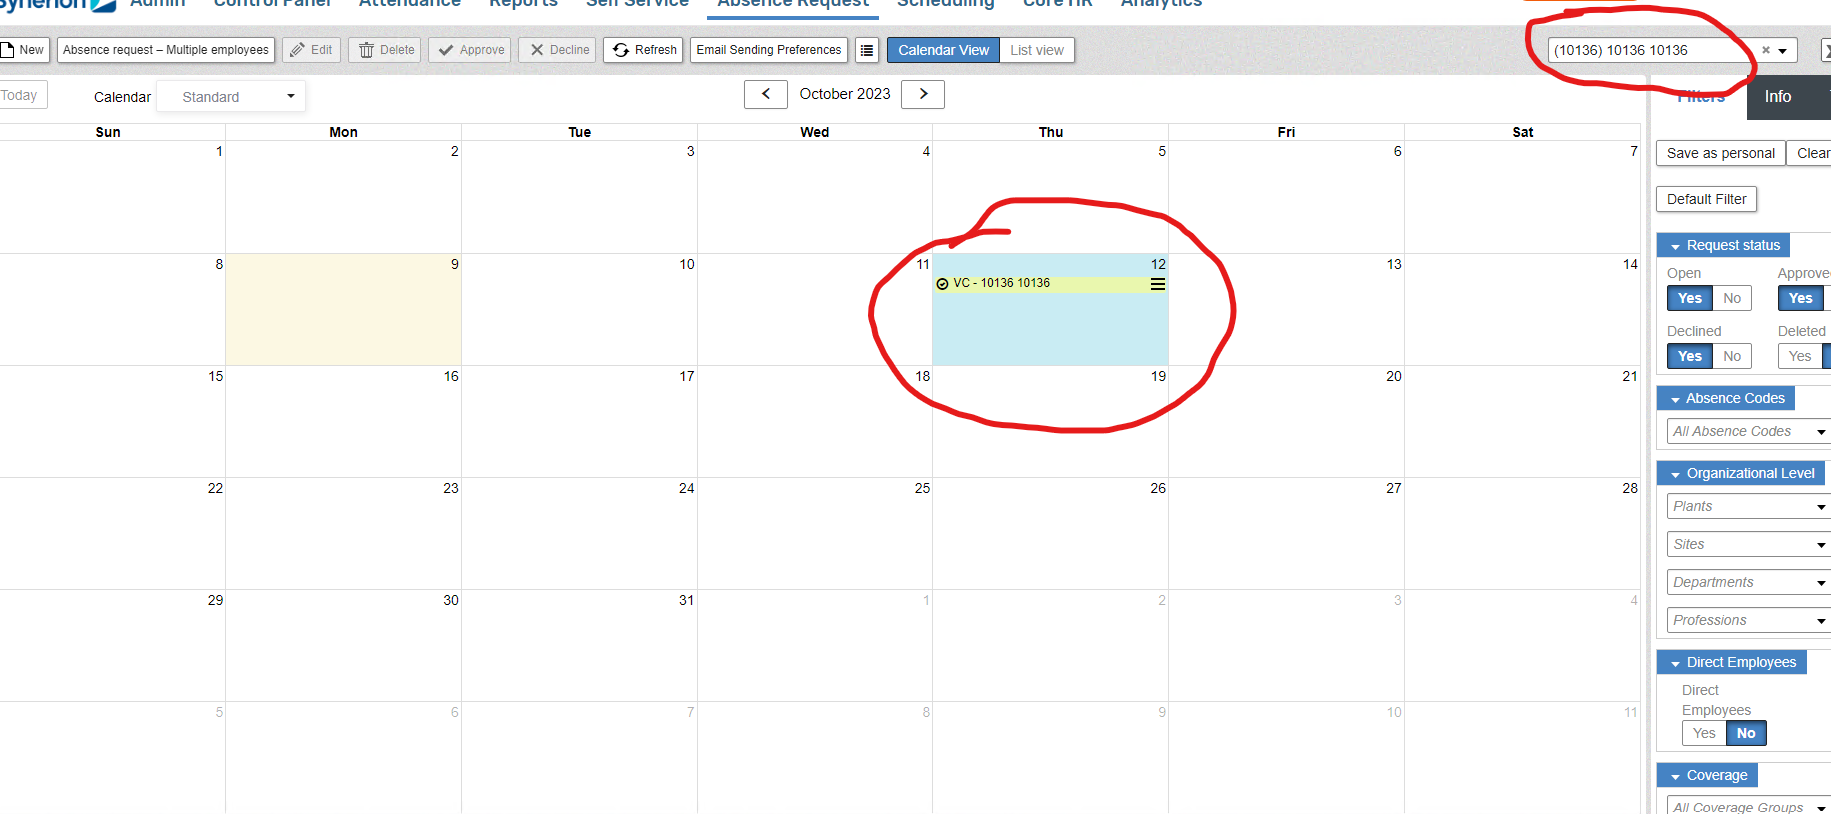 A screen shot of a calendar

Description automatically generated